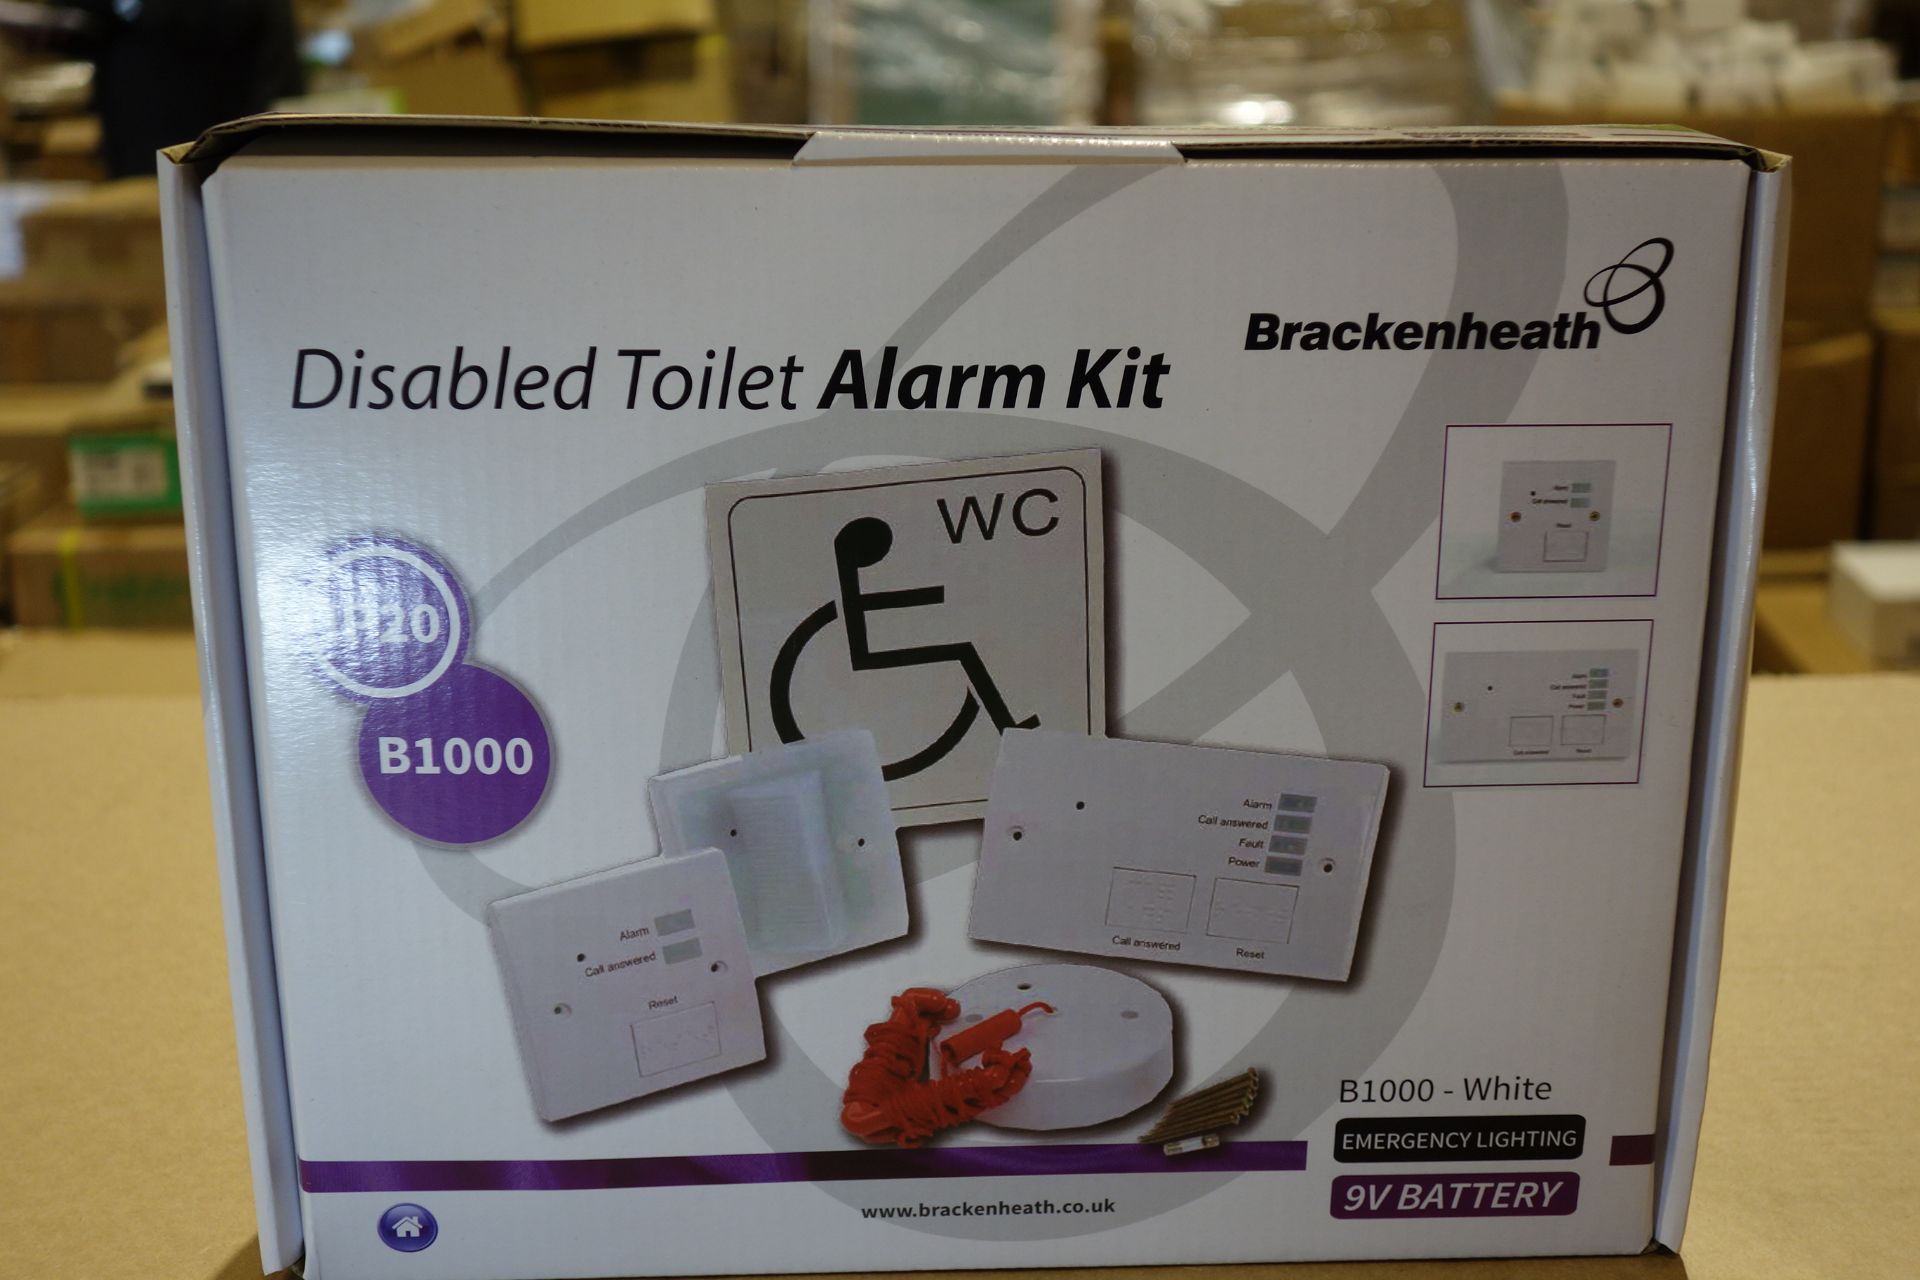 5x Brackenheath B1000 Disabled Toilet Alarm Kits